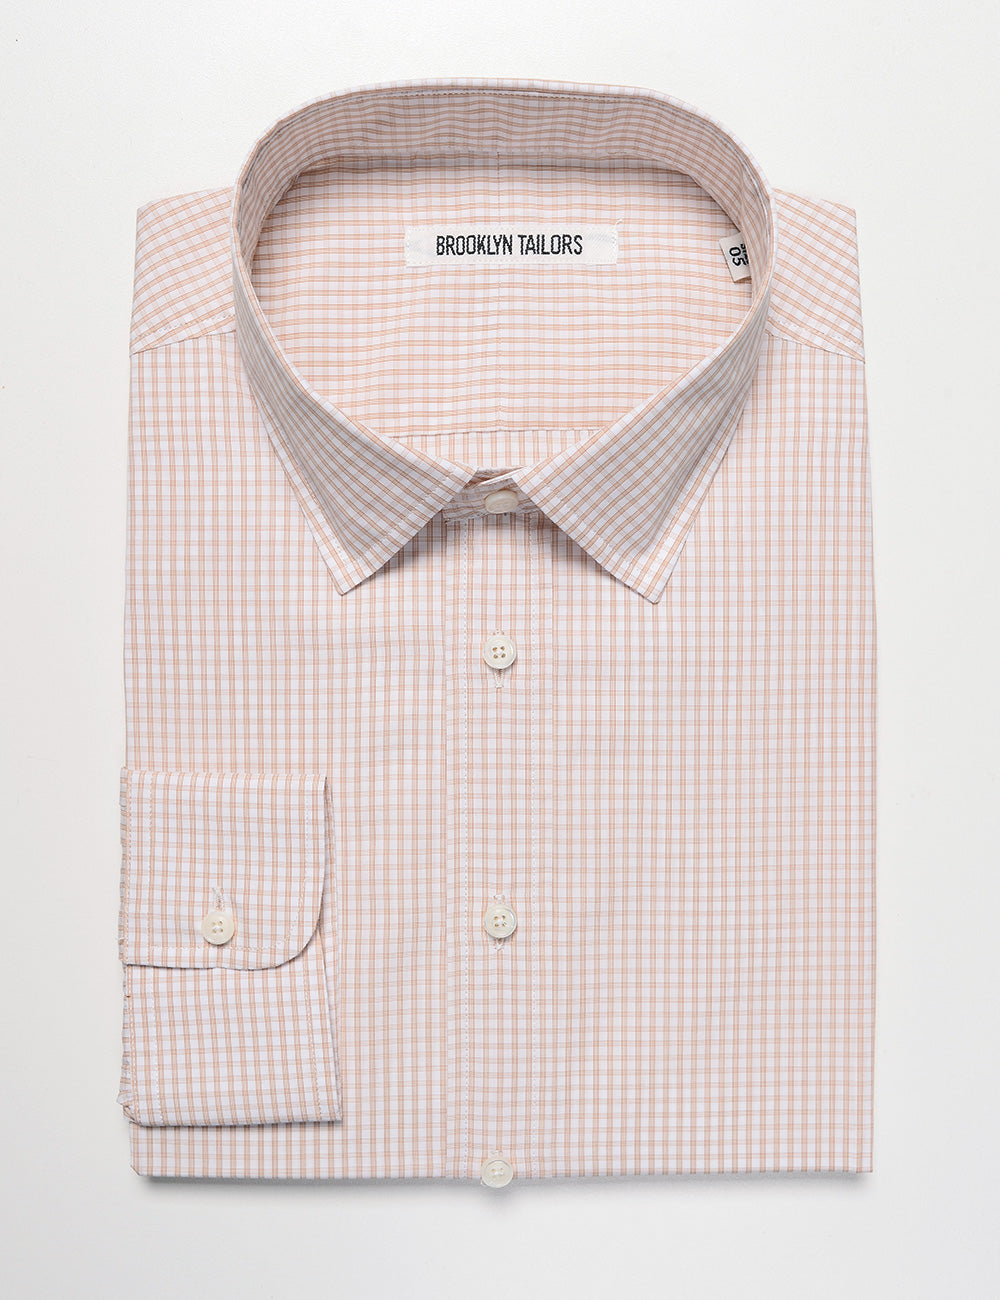 FINAL SALE: BKT20 Slim Dress Shirt in Micro Check - White / Espresso